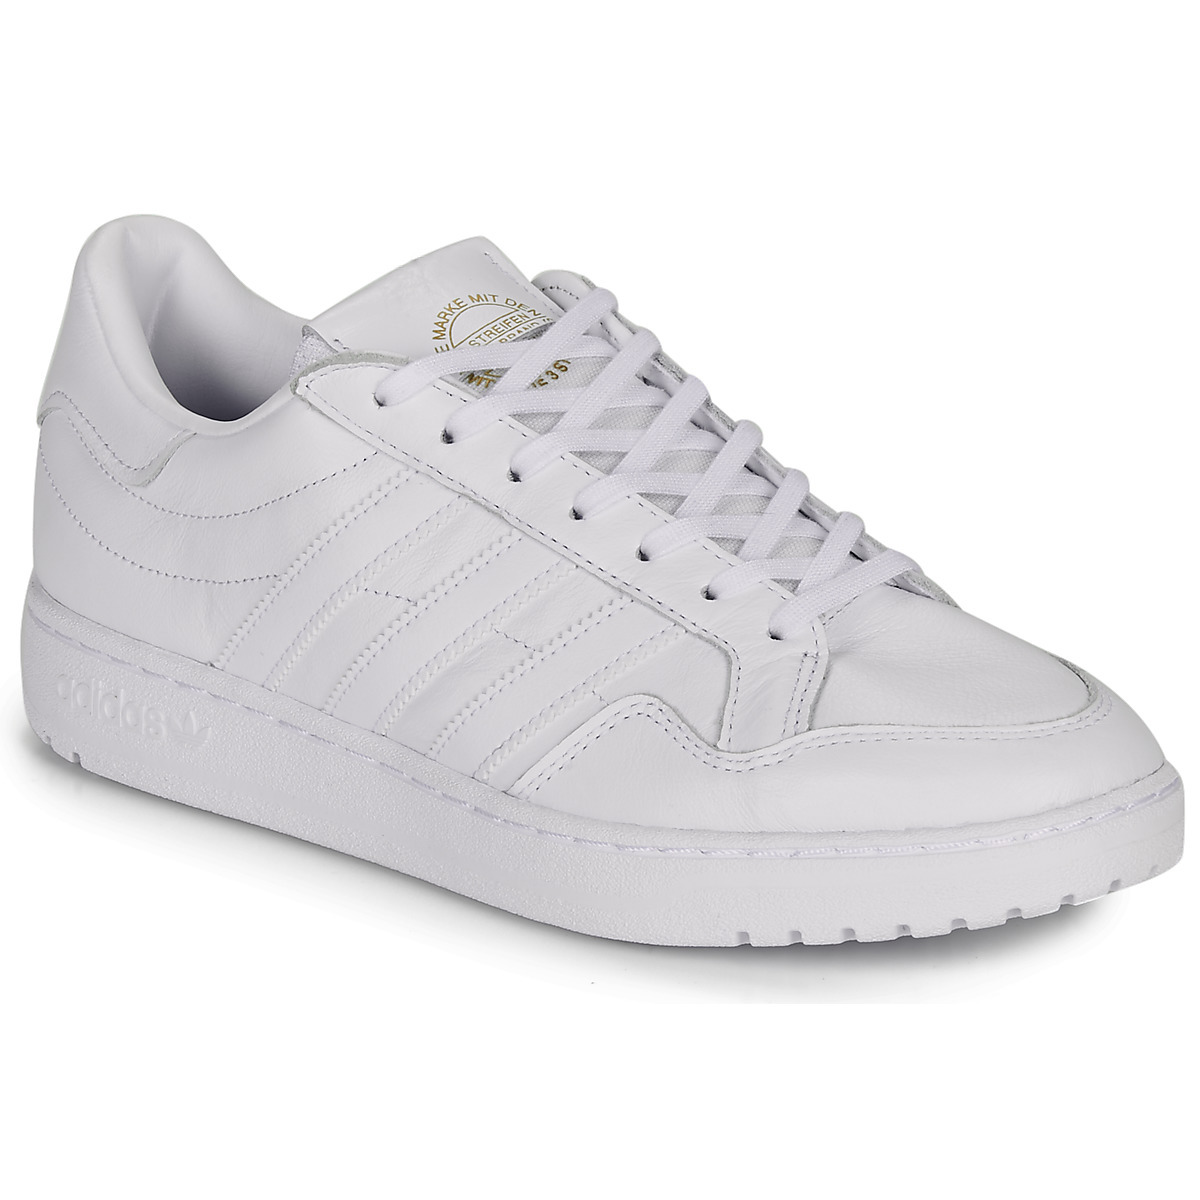 Lady Sneakers in White - Adidas - Spartoo GOOFASH